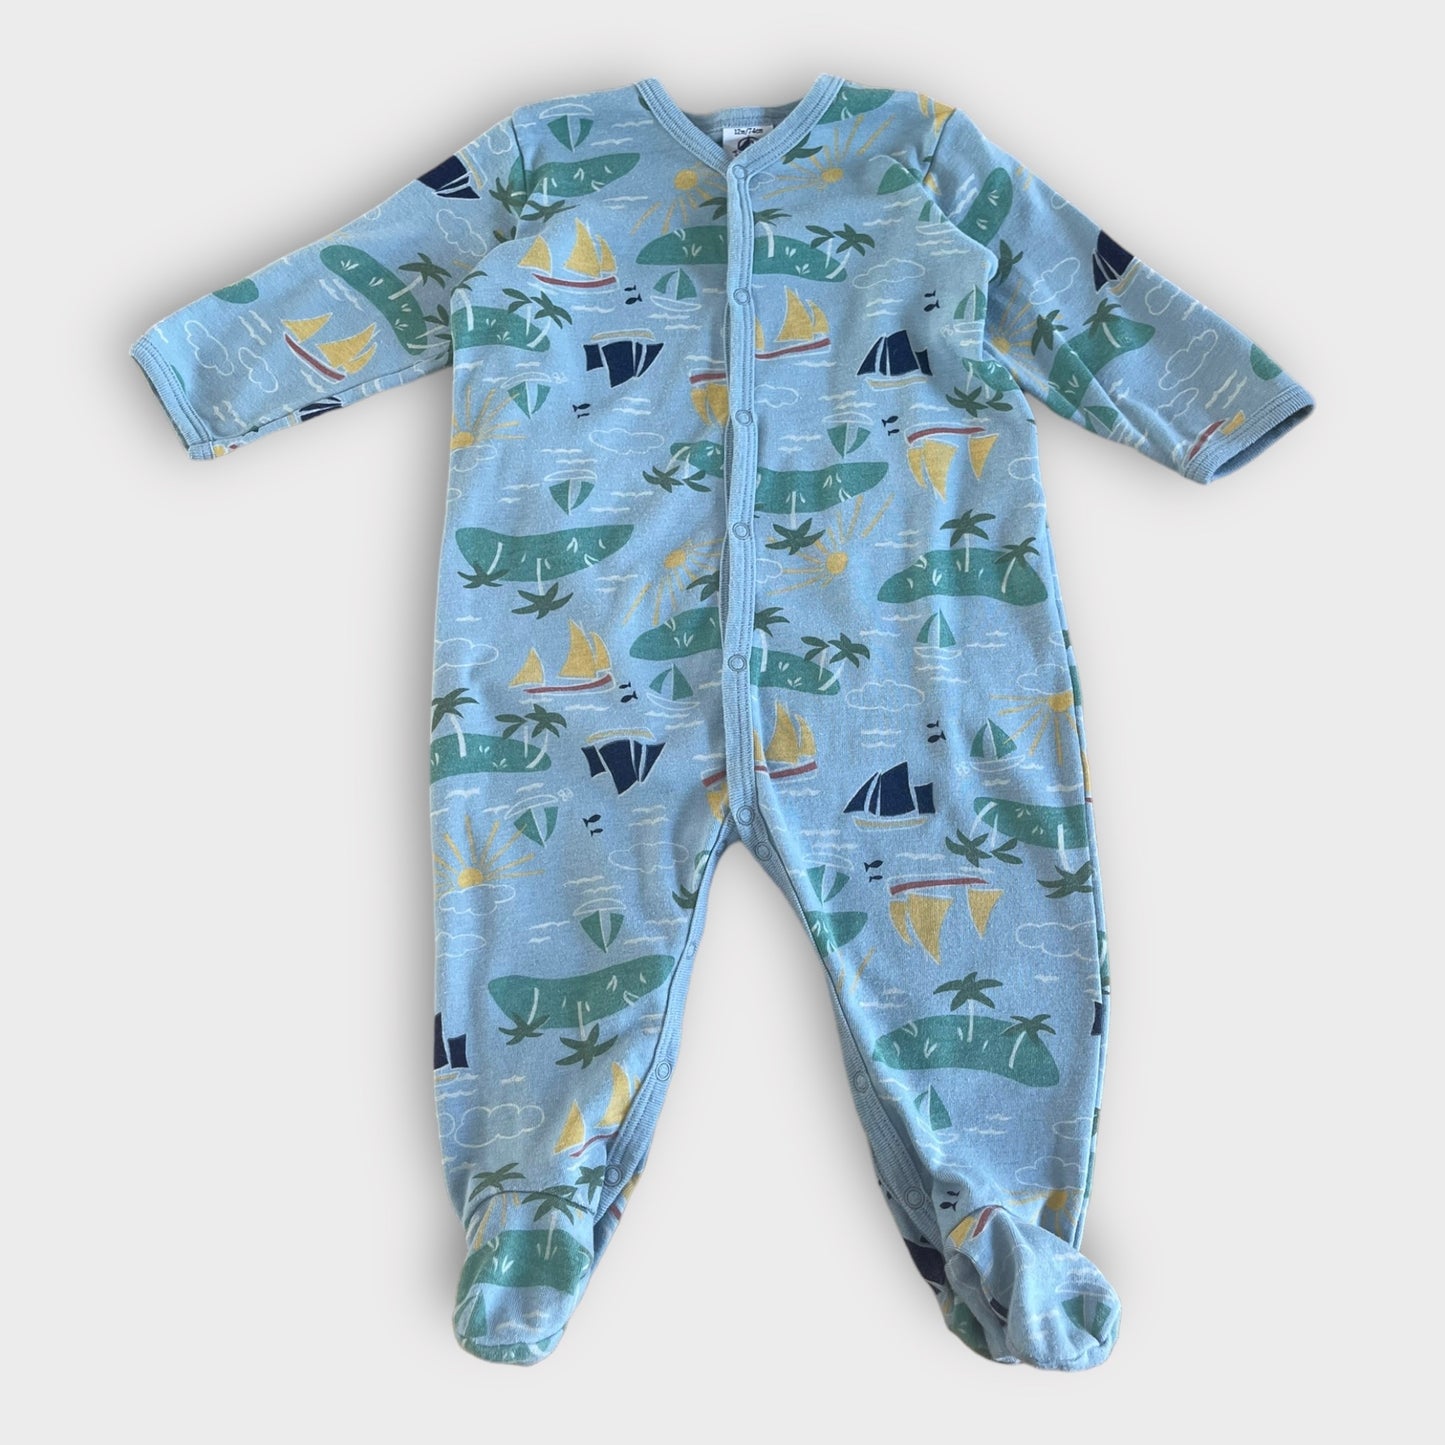 Petit Bateau - pajamas - 12 months